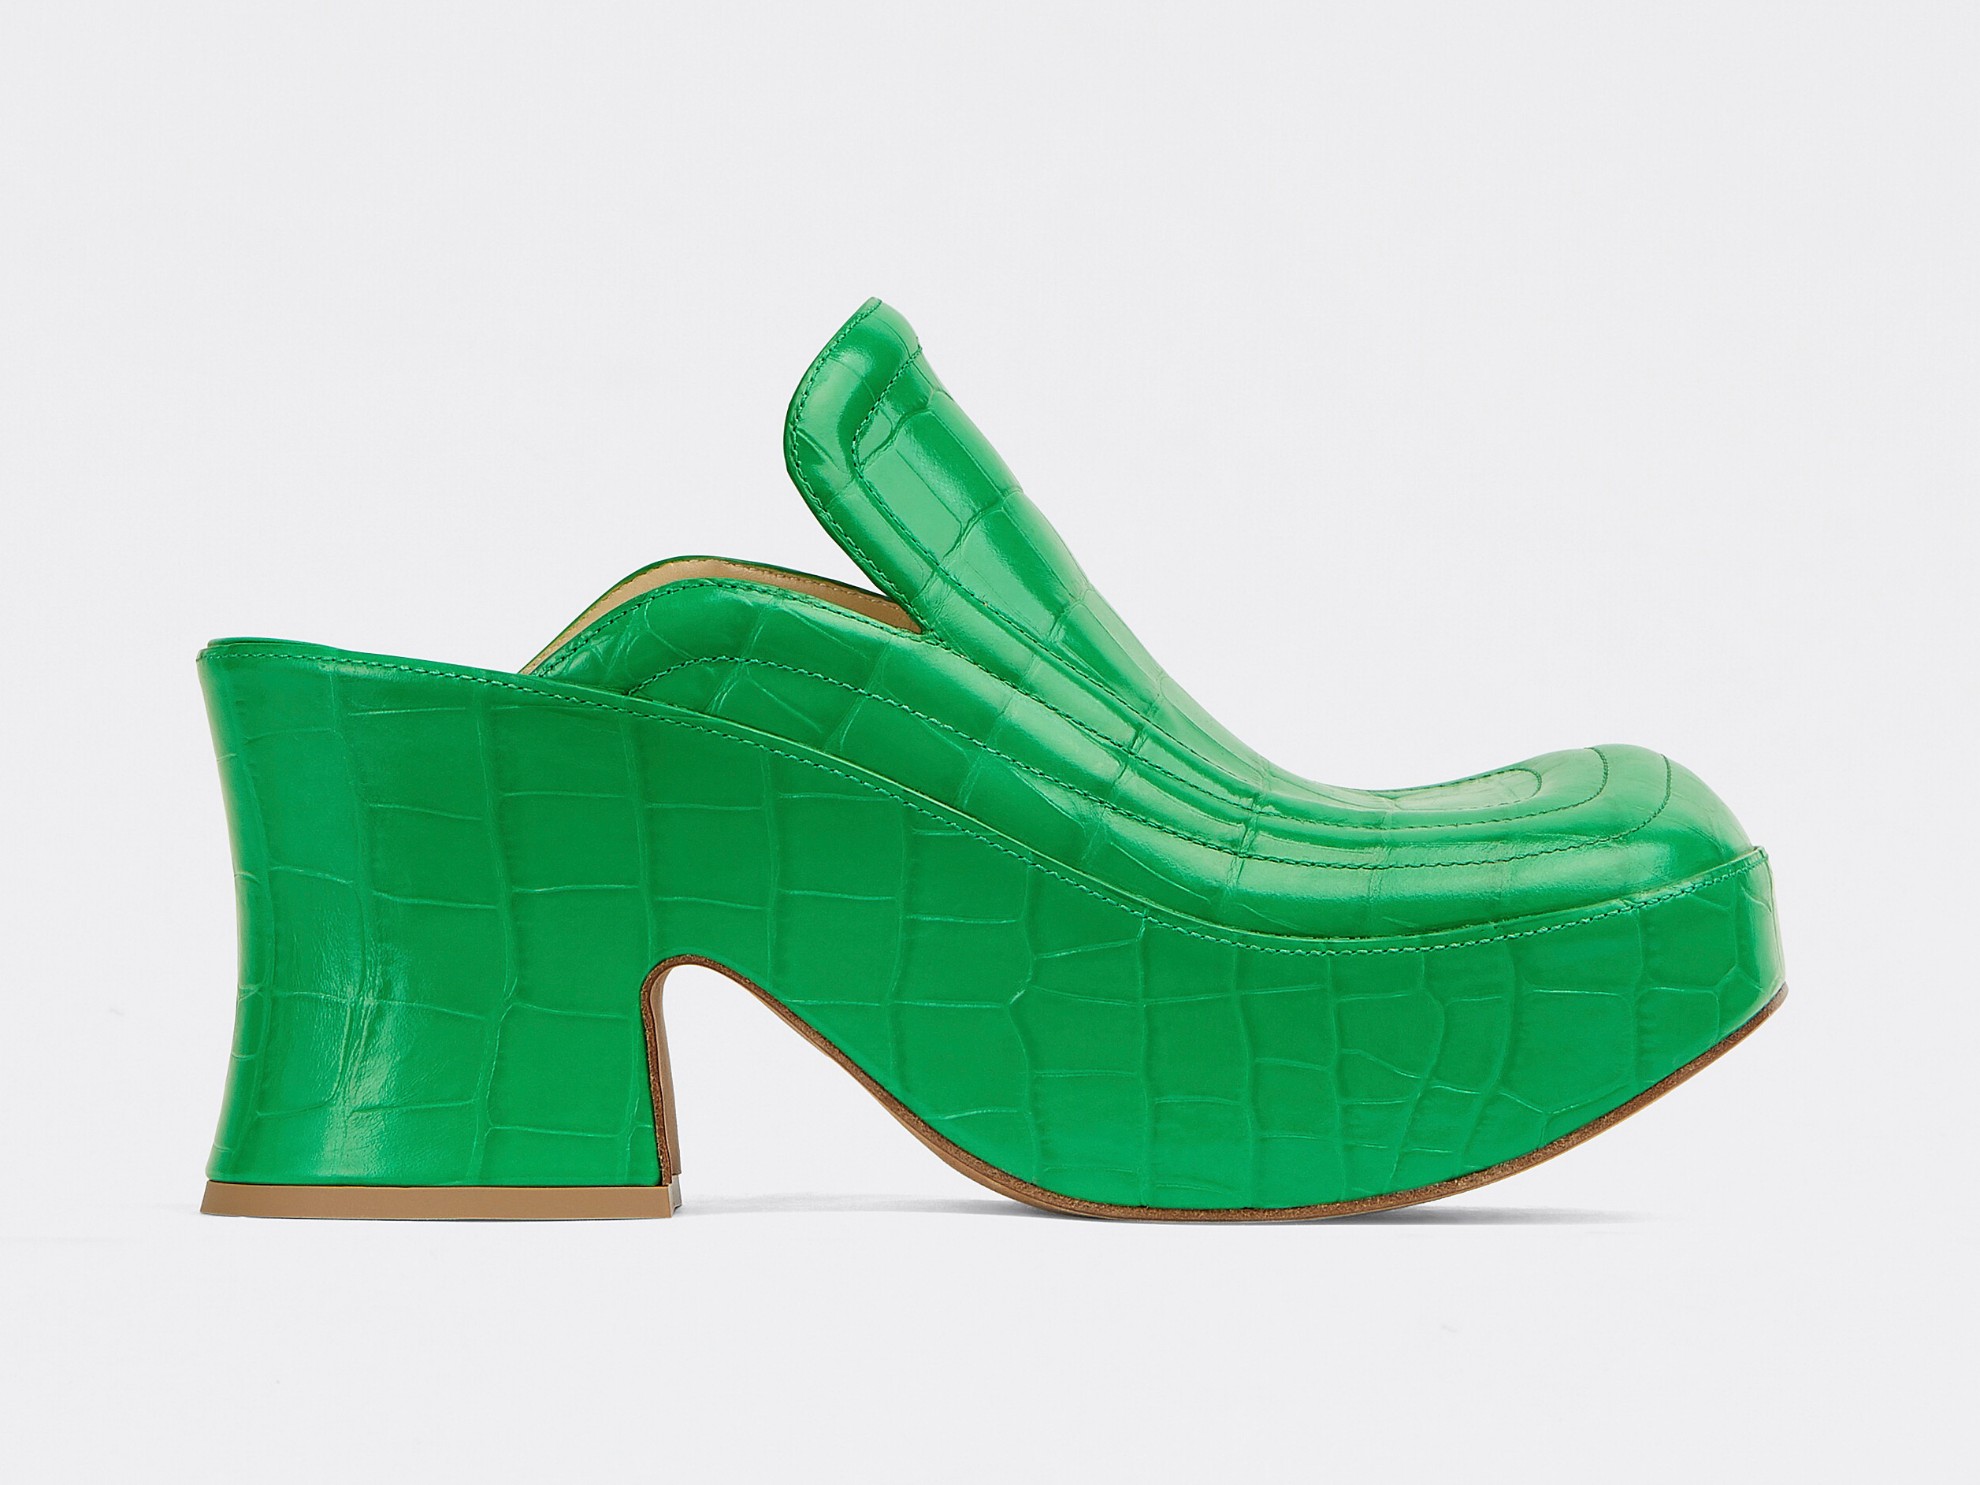 Bottega Veneta clogs: minimalism and colors for an elegant design